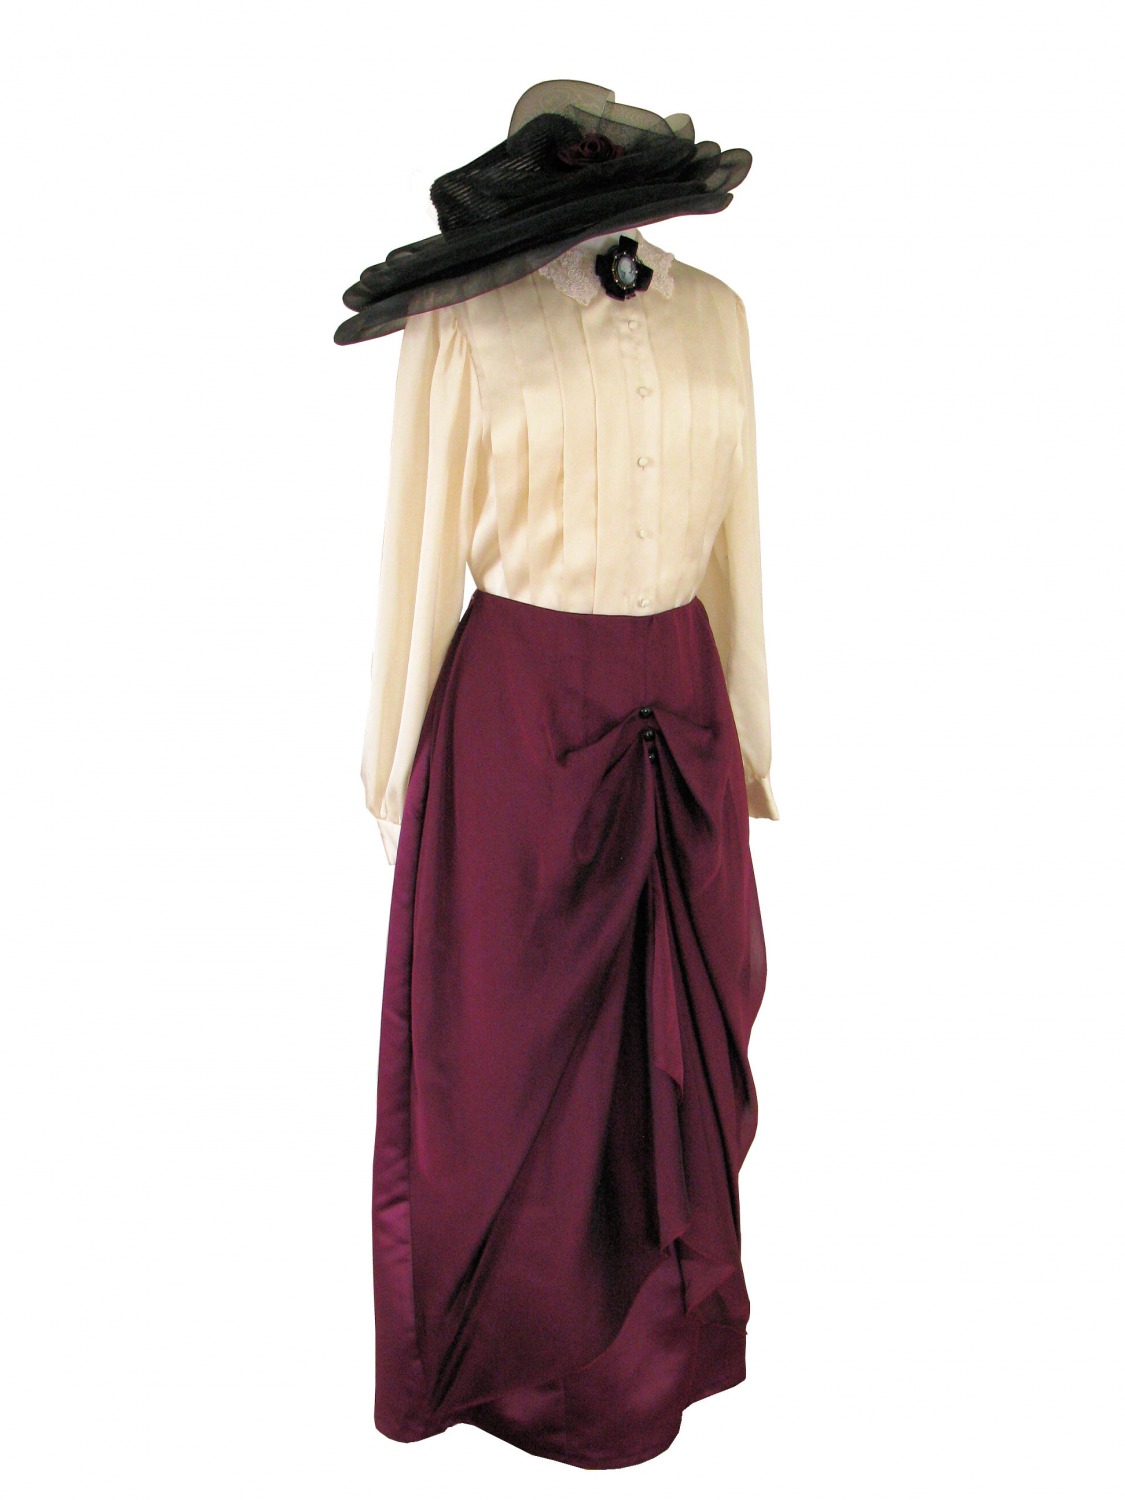 Ladies Edwardian Suffragette Downton Abbey Titanic Costume Size 10 - 12 Image